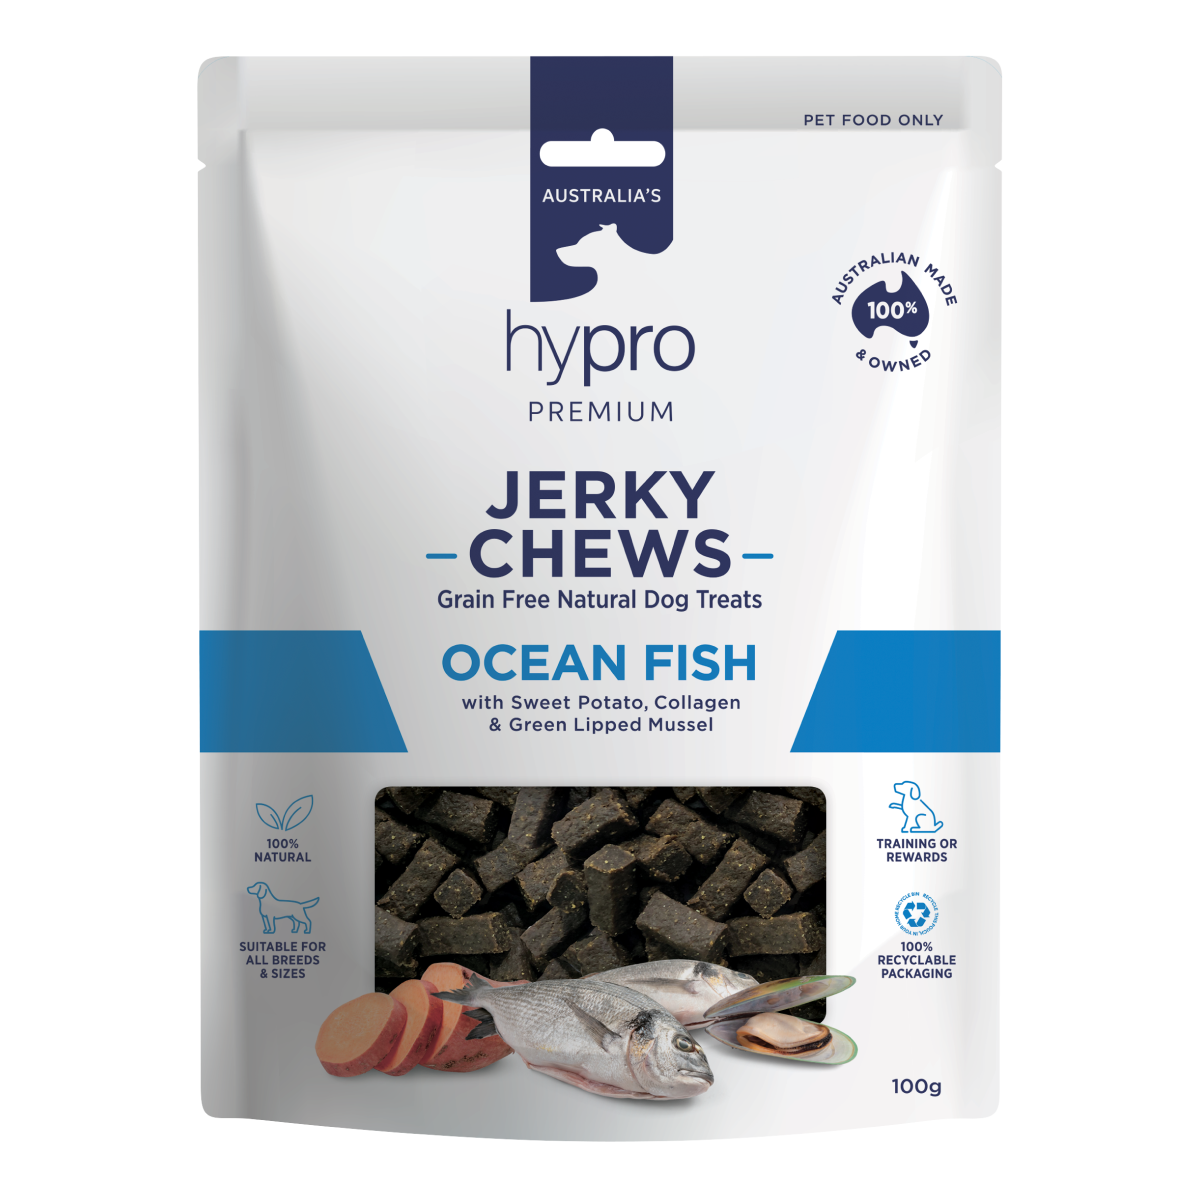 Hypro Premium Jerky Chews Ocean Fish Dog Treats